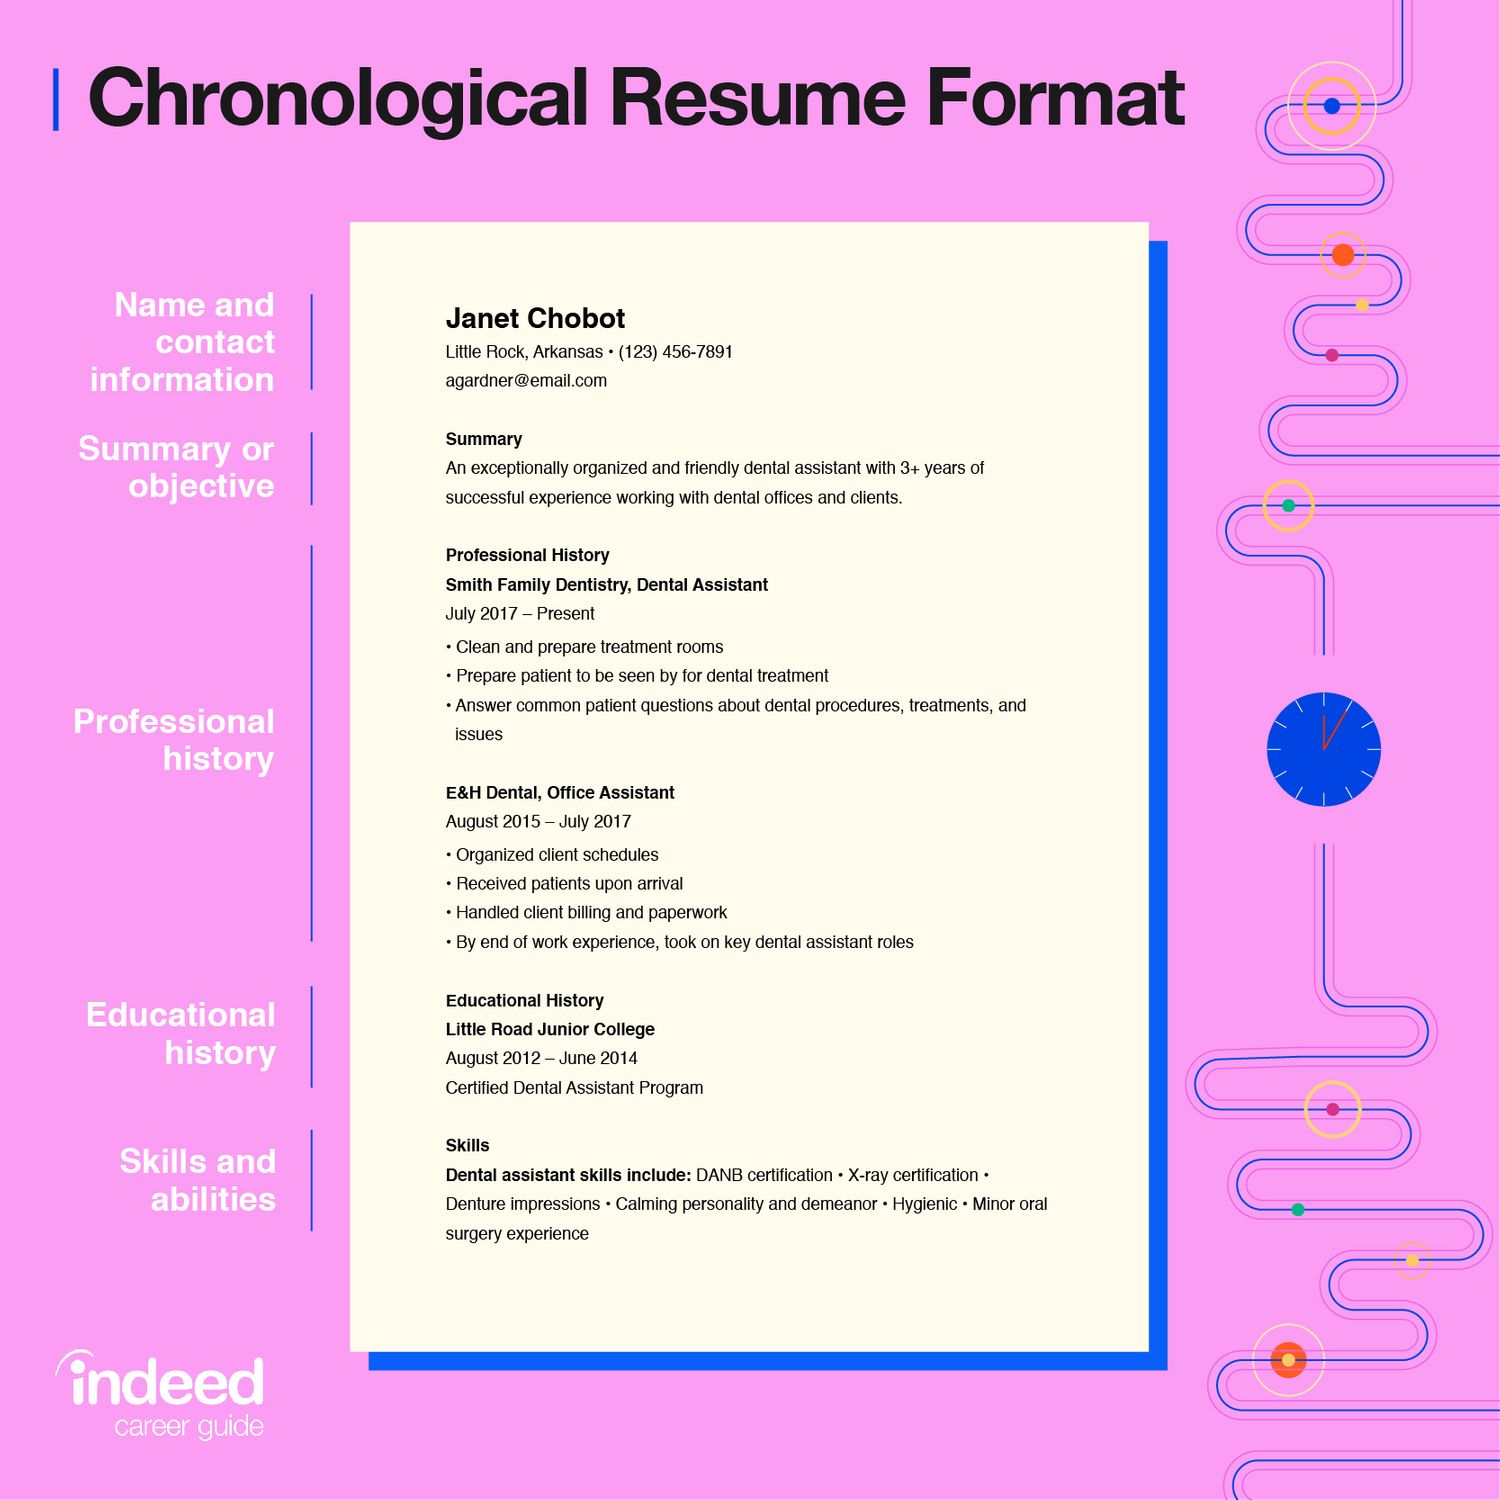 Chronological Resume Format